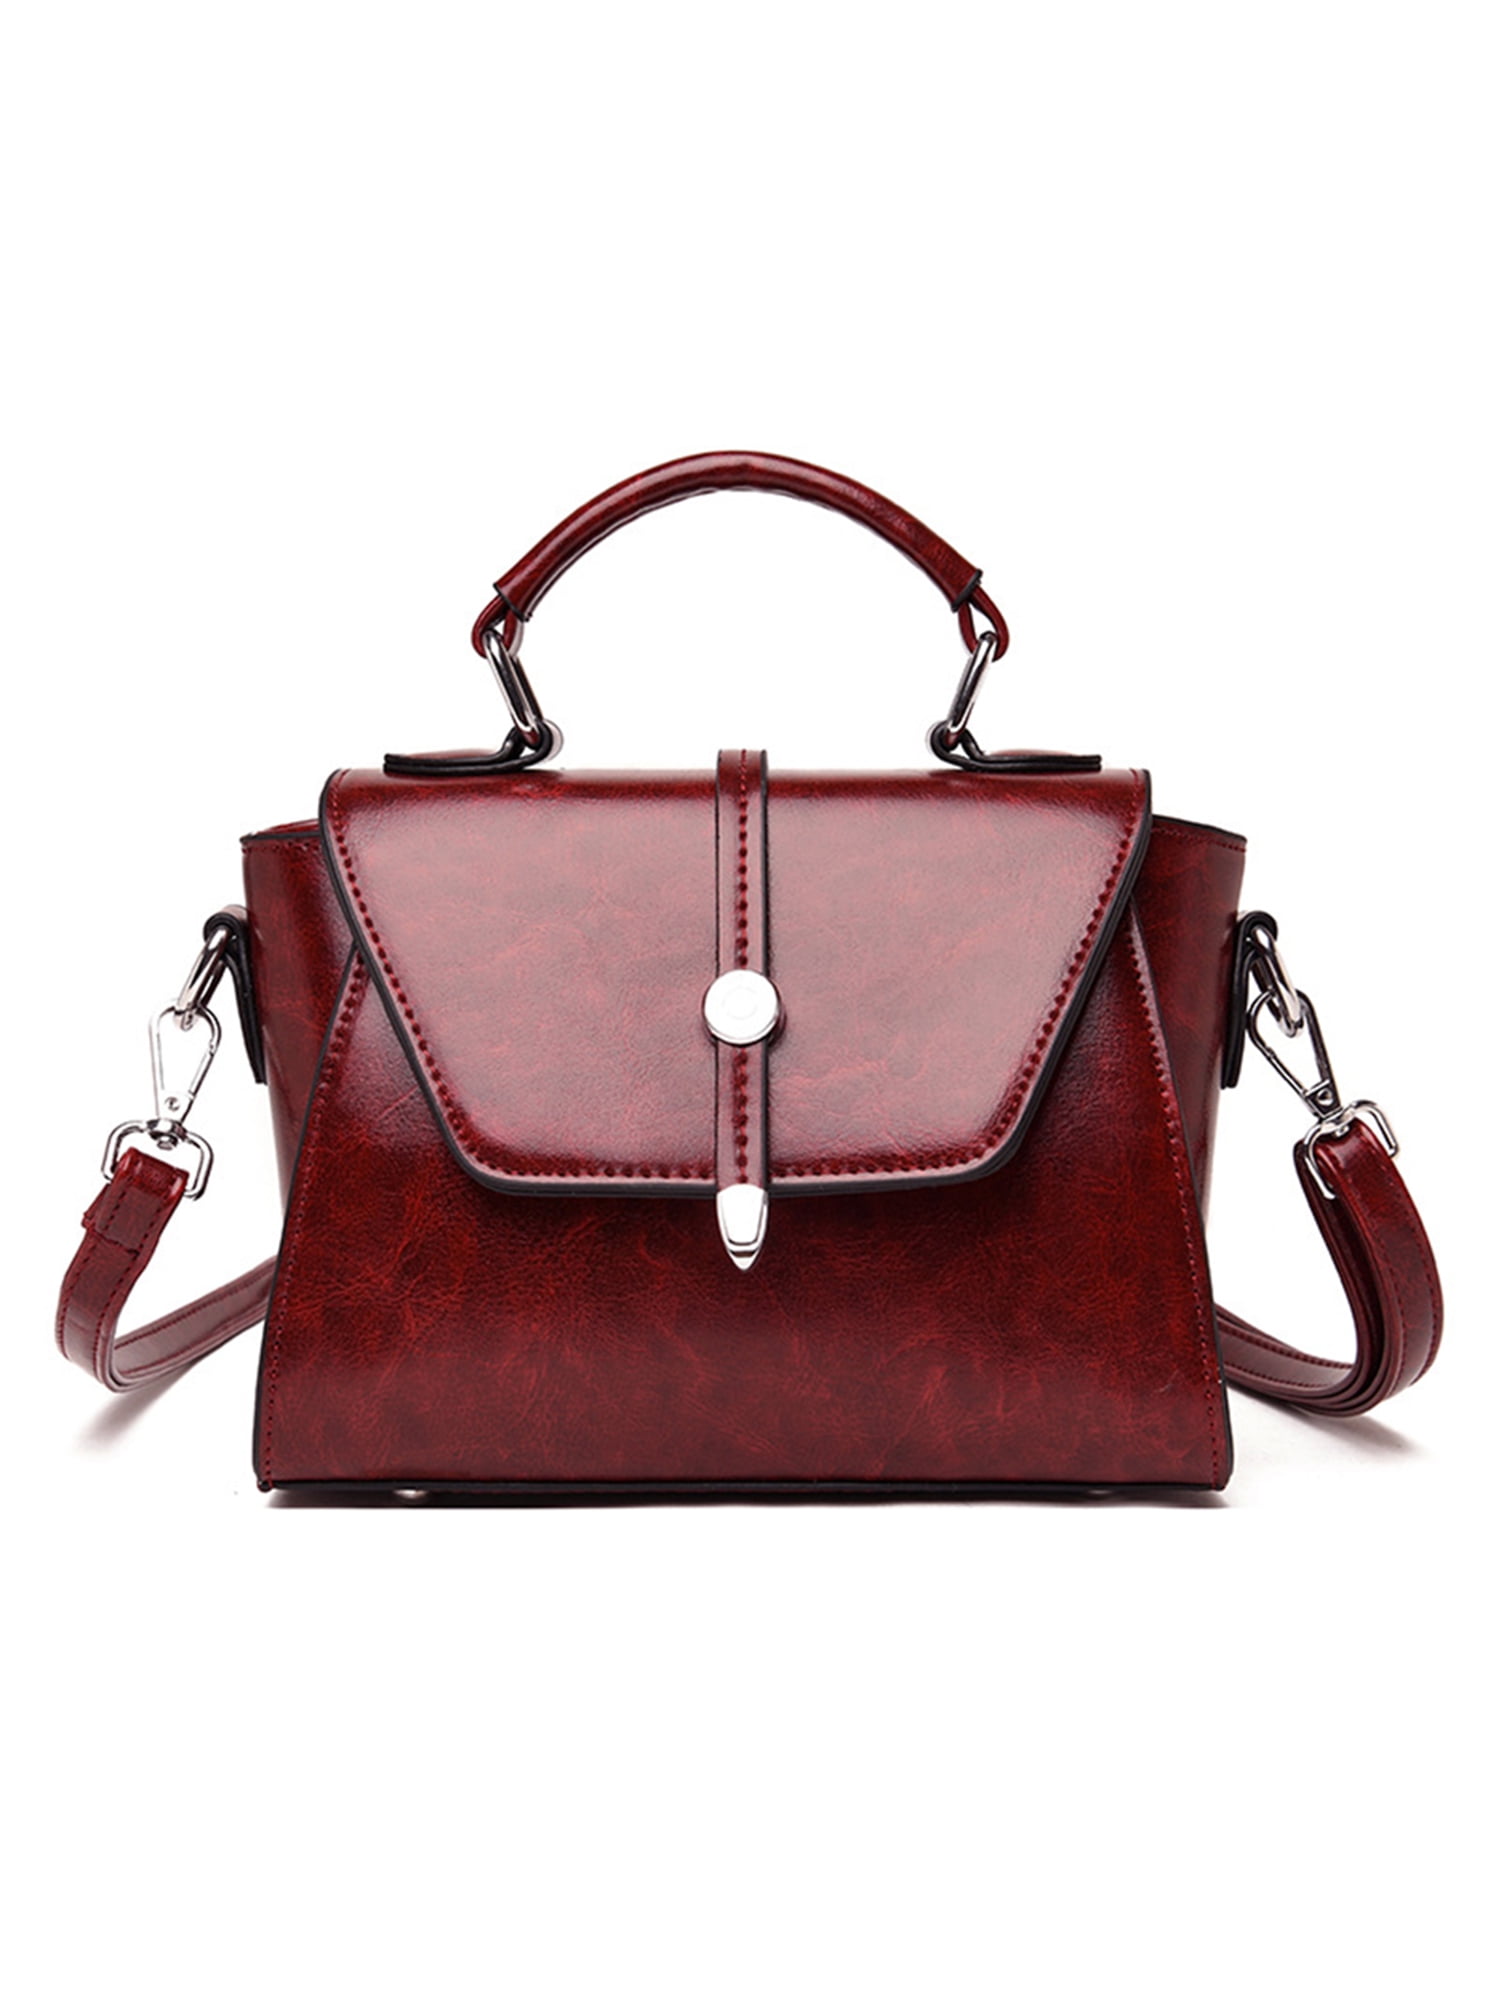 Avamo Women Handbag Large Capacity Shoulder Bags Multi Pockets Tote Bag PU  Leather Purse Shopping Satchel Wine Red 